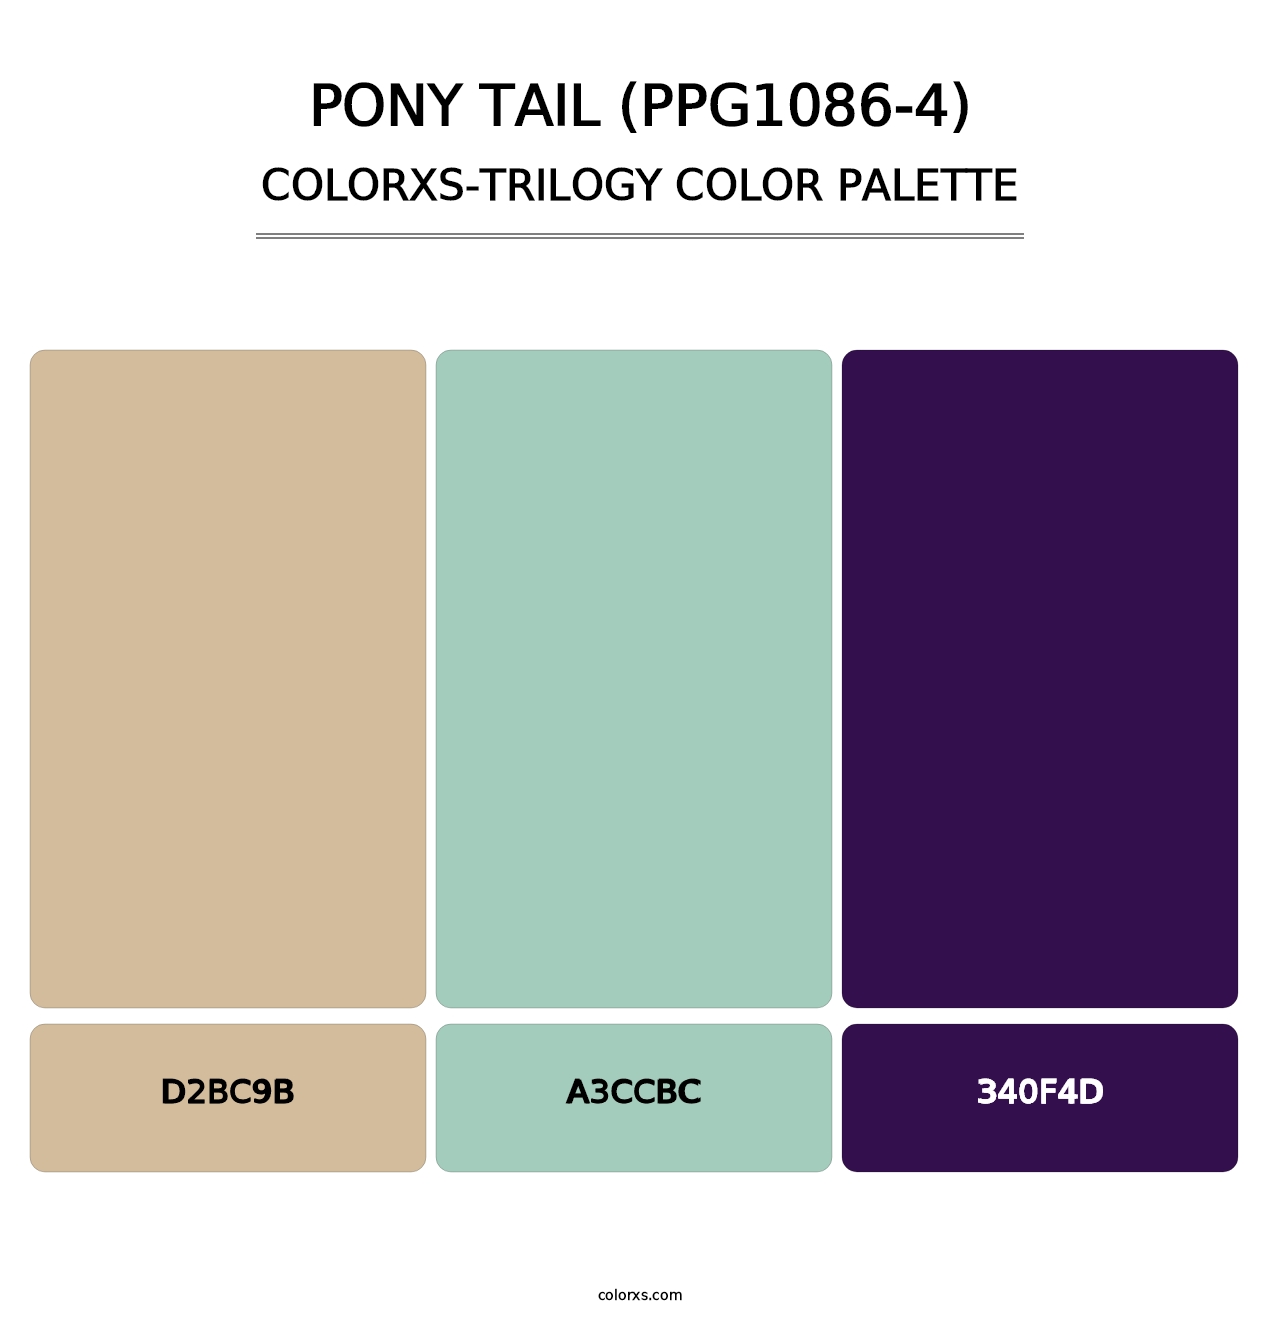 Pony Tail (PPG1086-4) - Colorxs Trilogy Palette